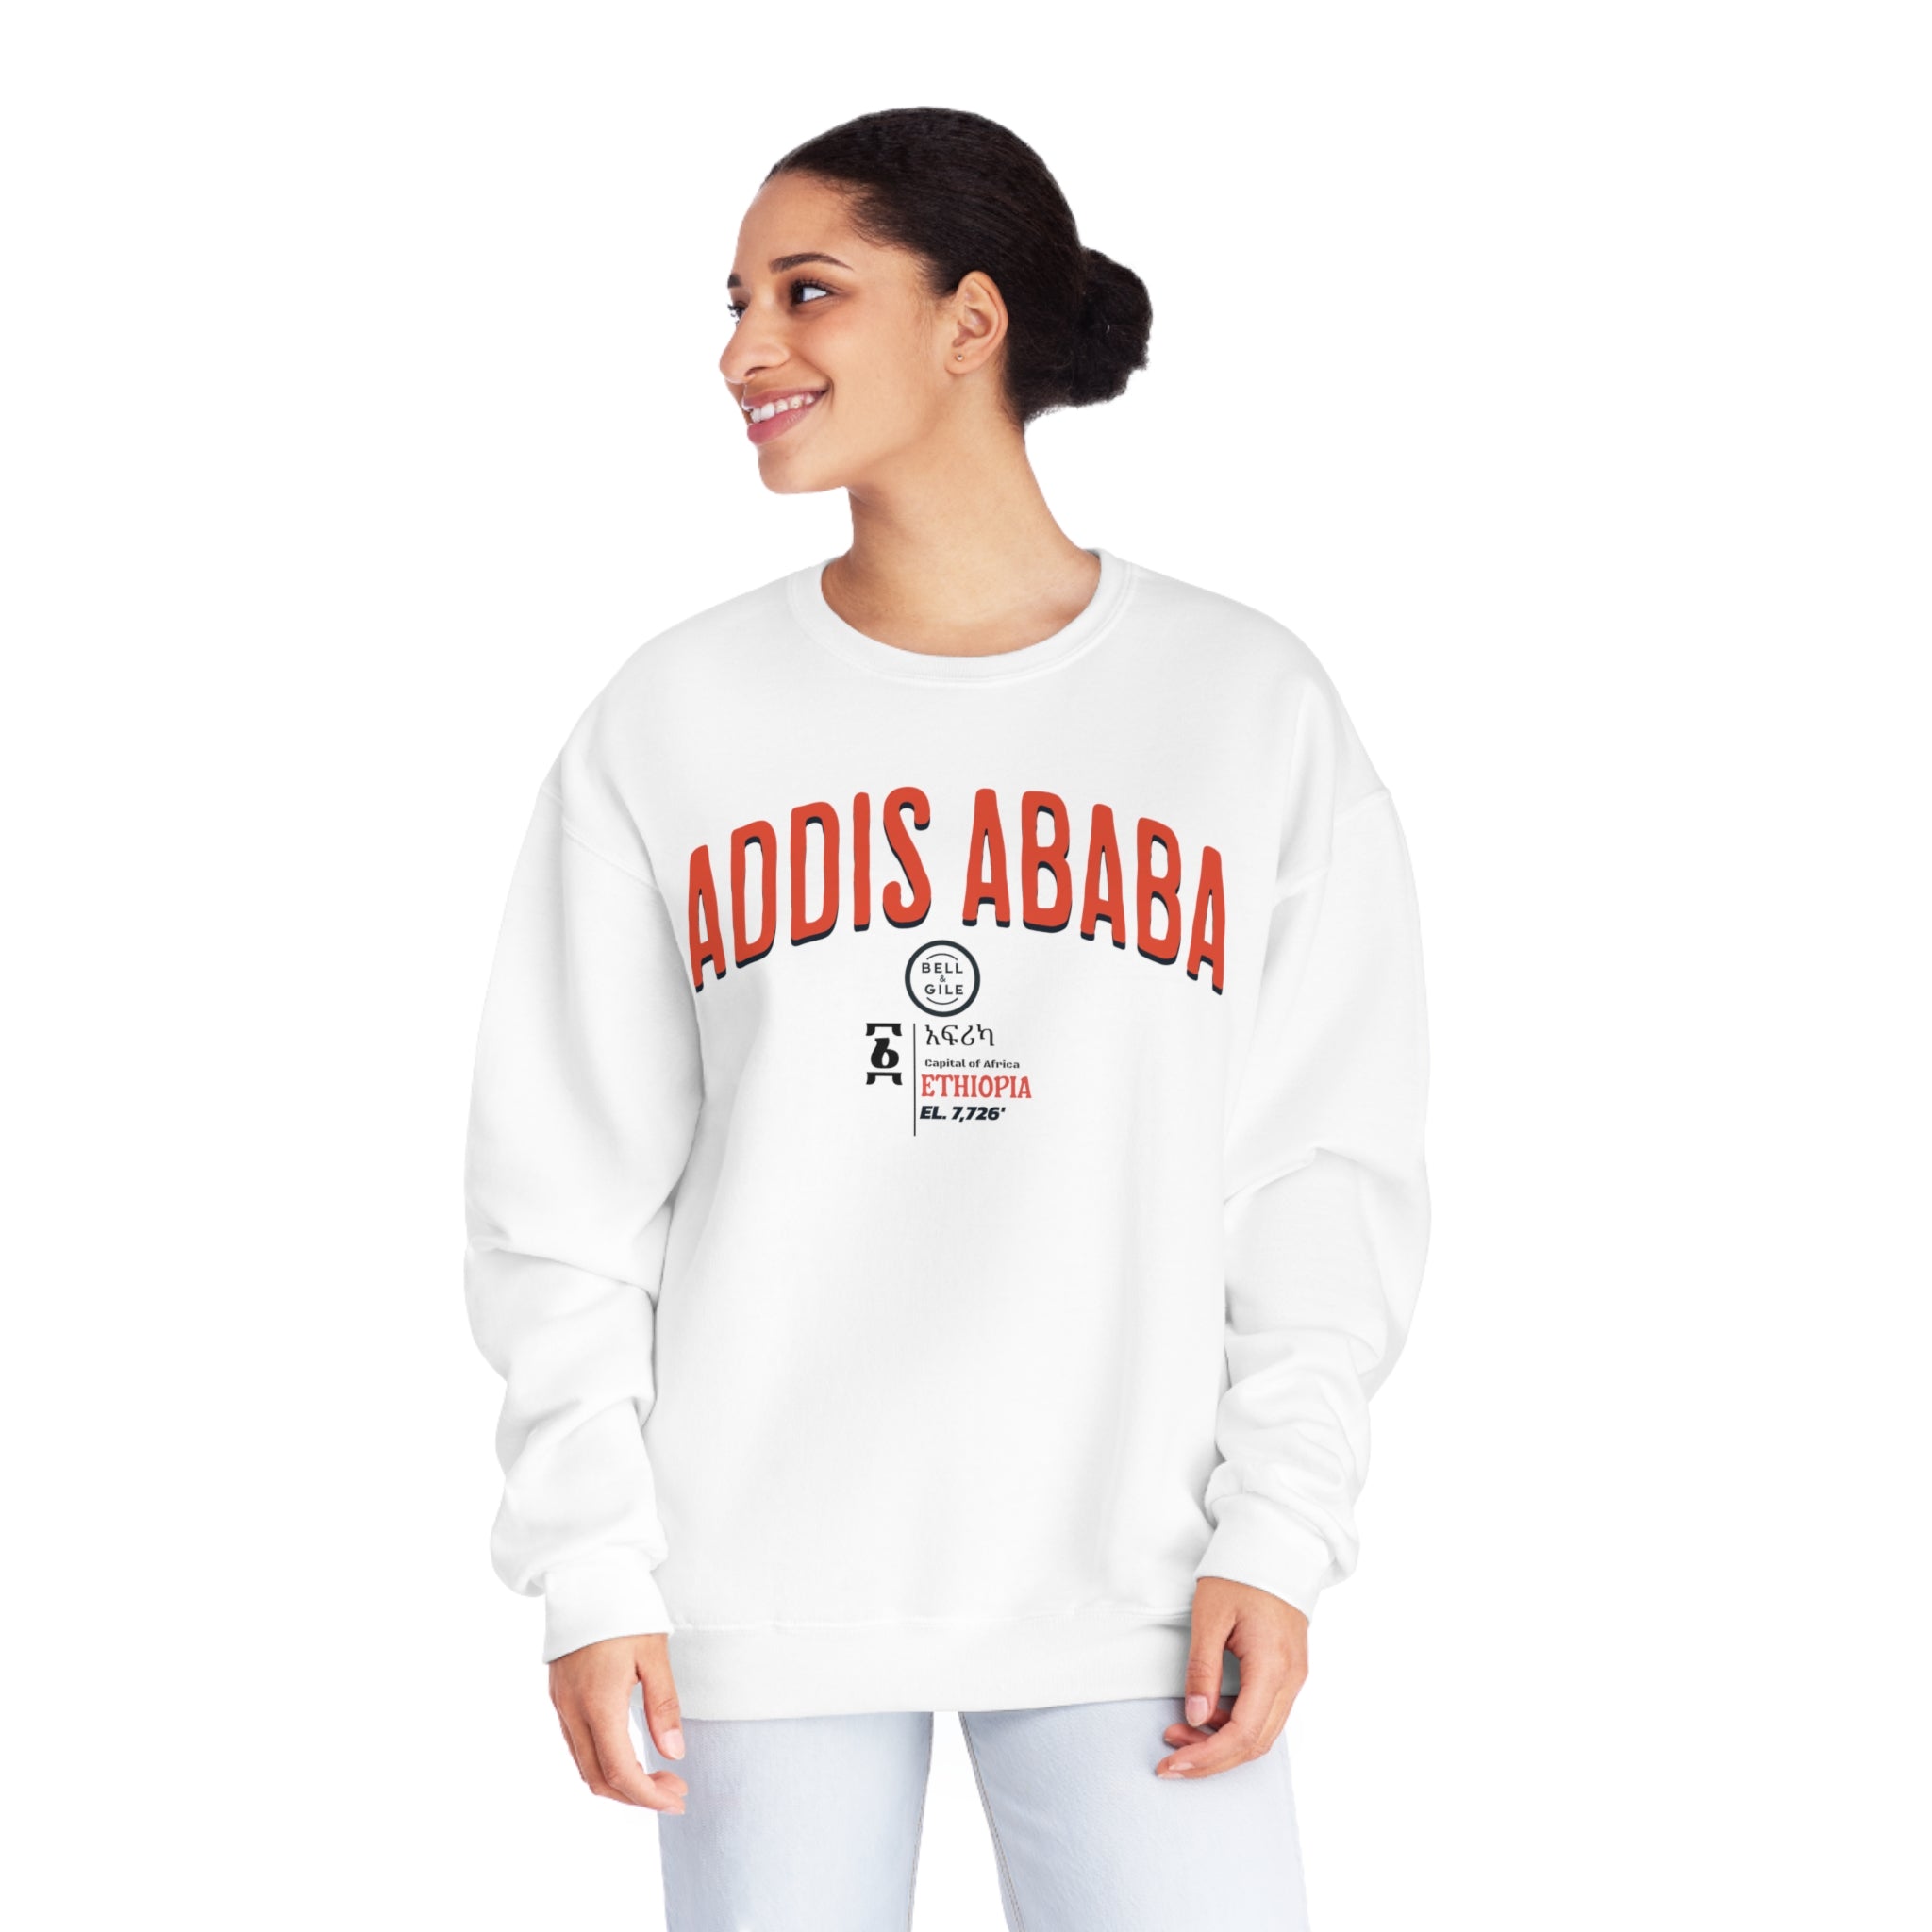 Addis Ababa Sweater